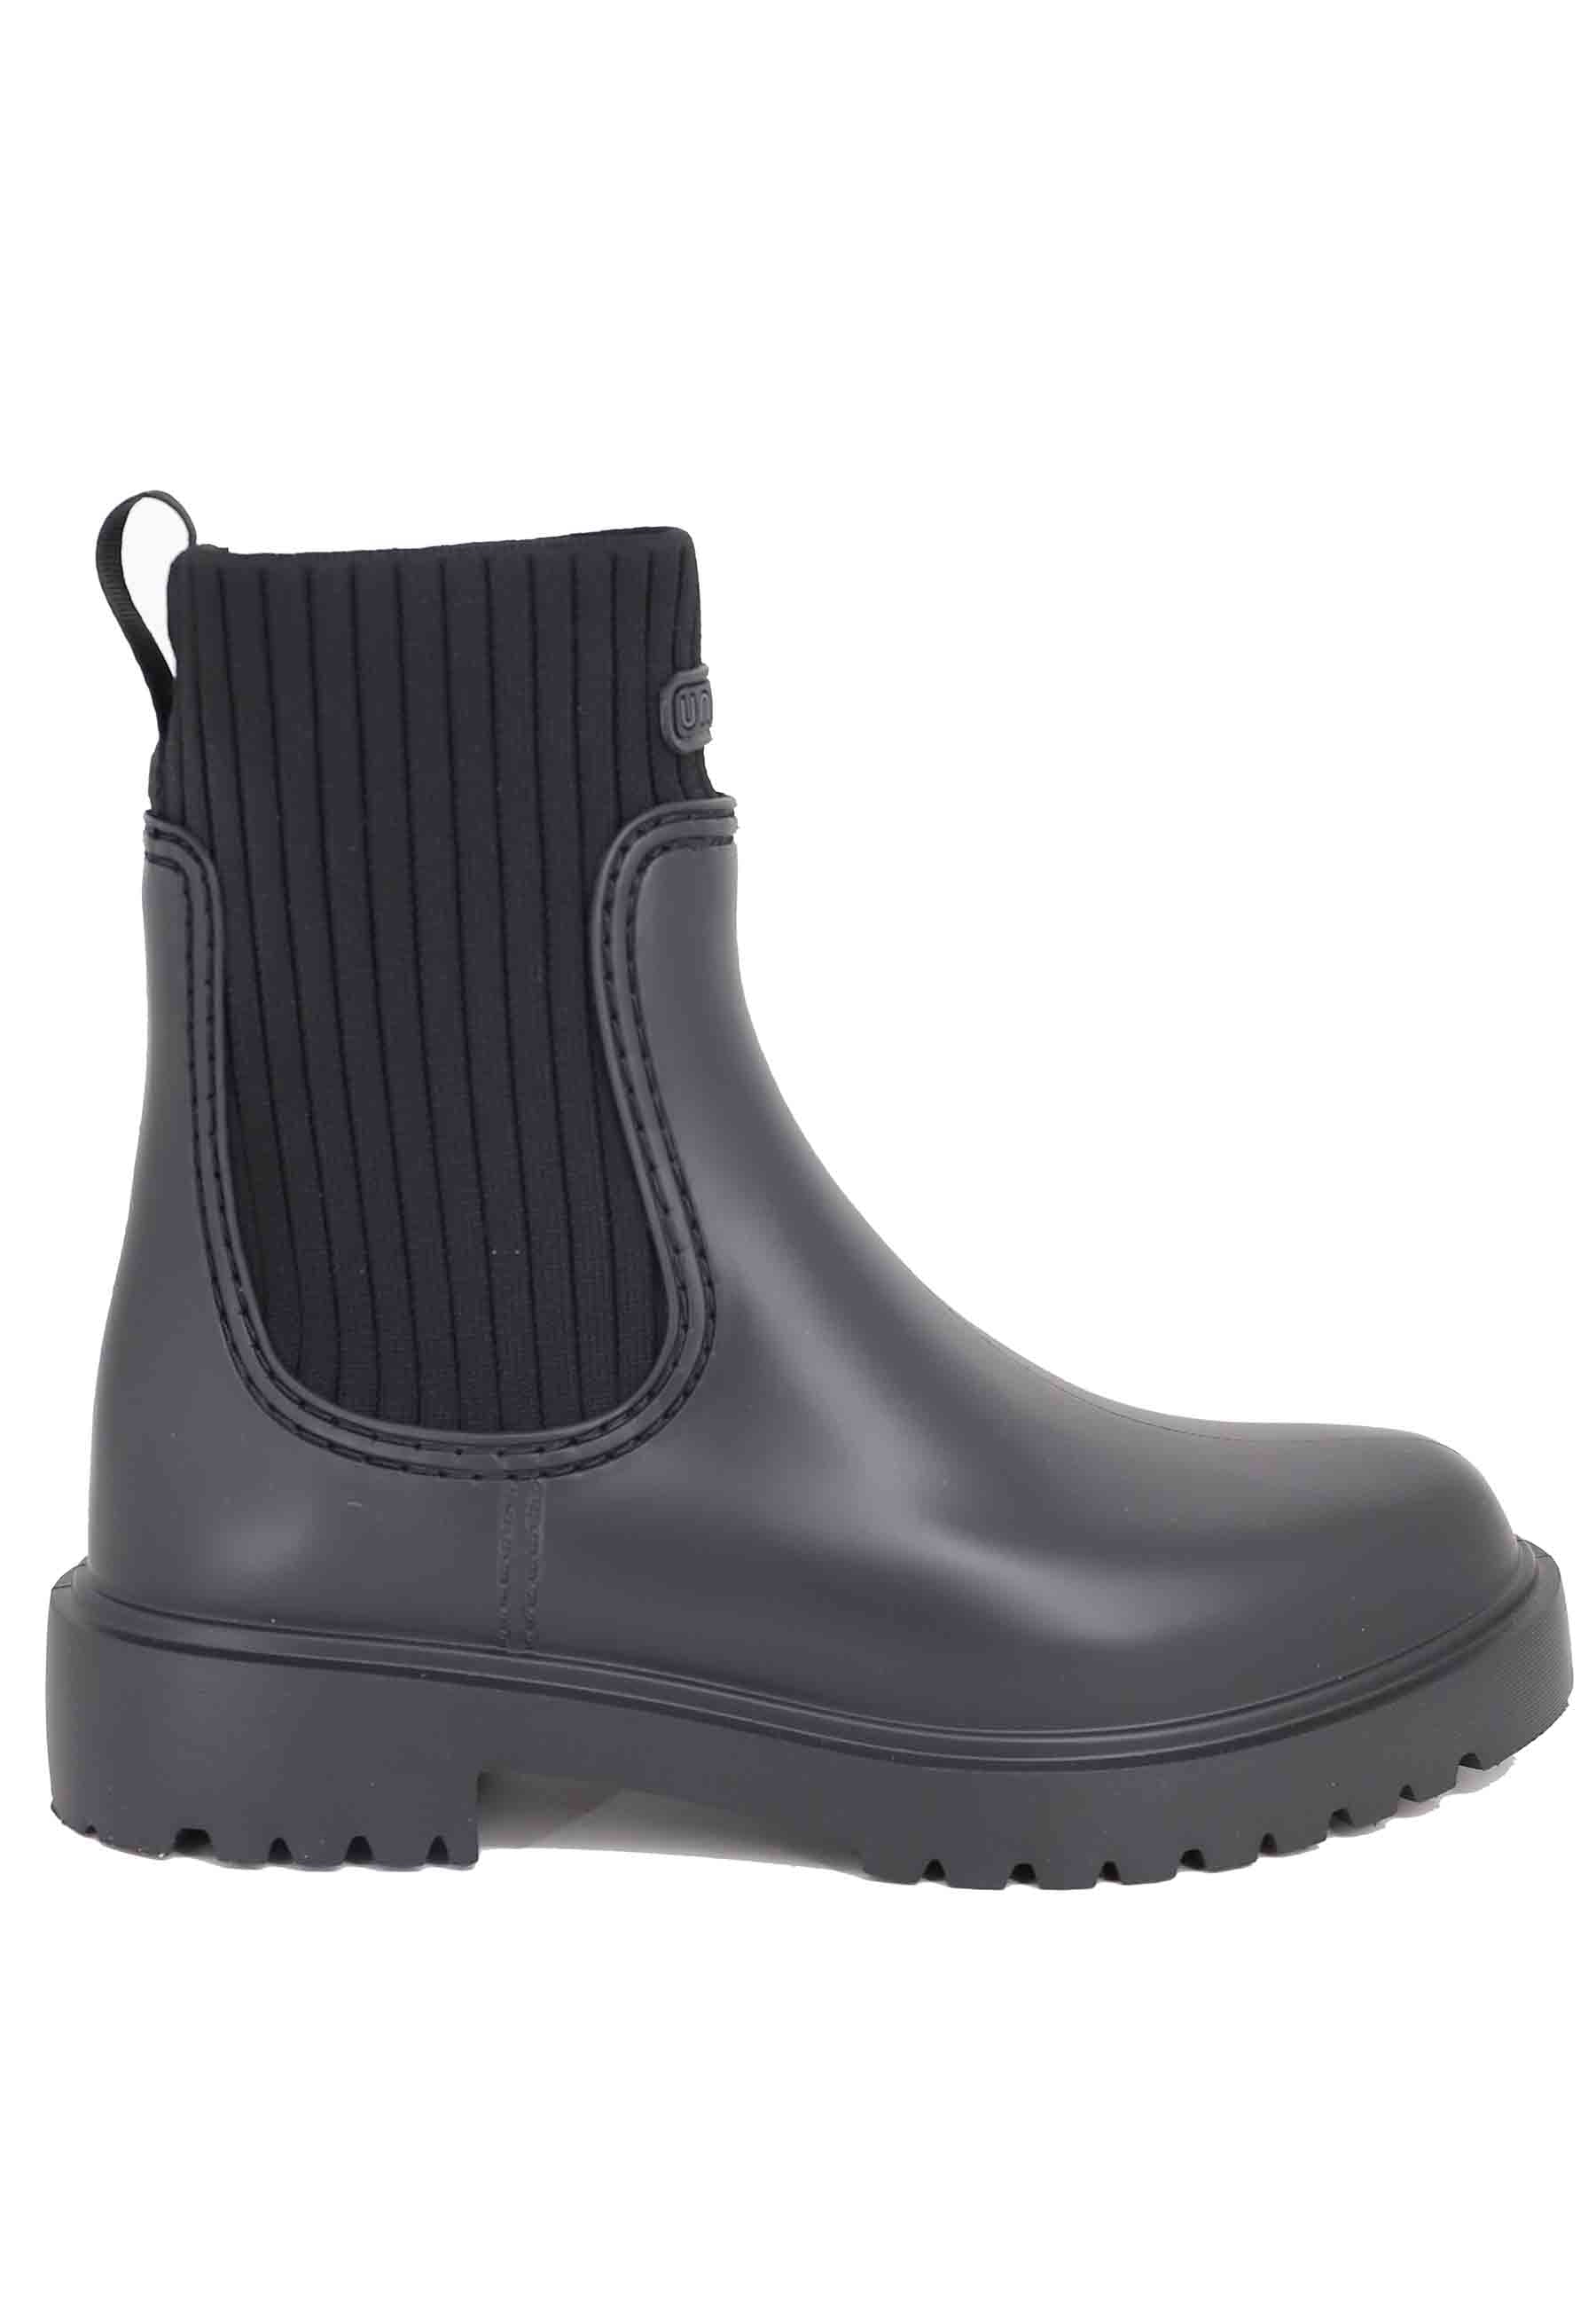 Women's rain boots in black PVC with side elastics